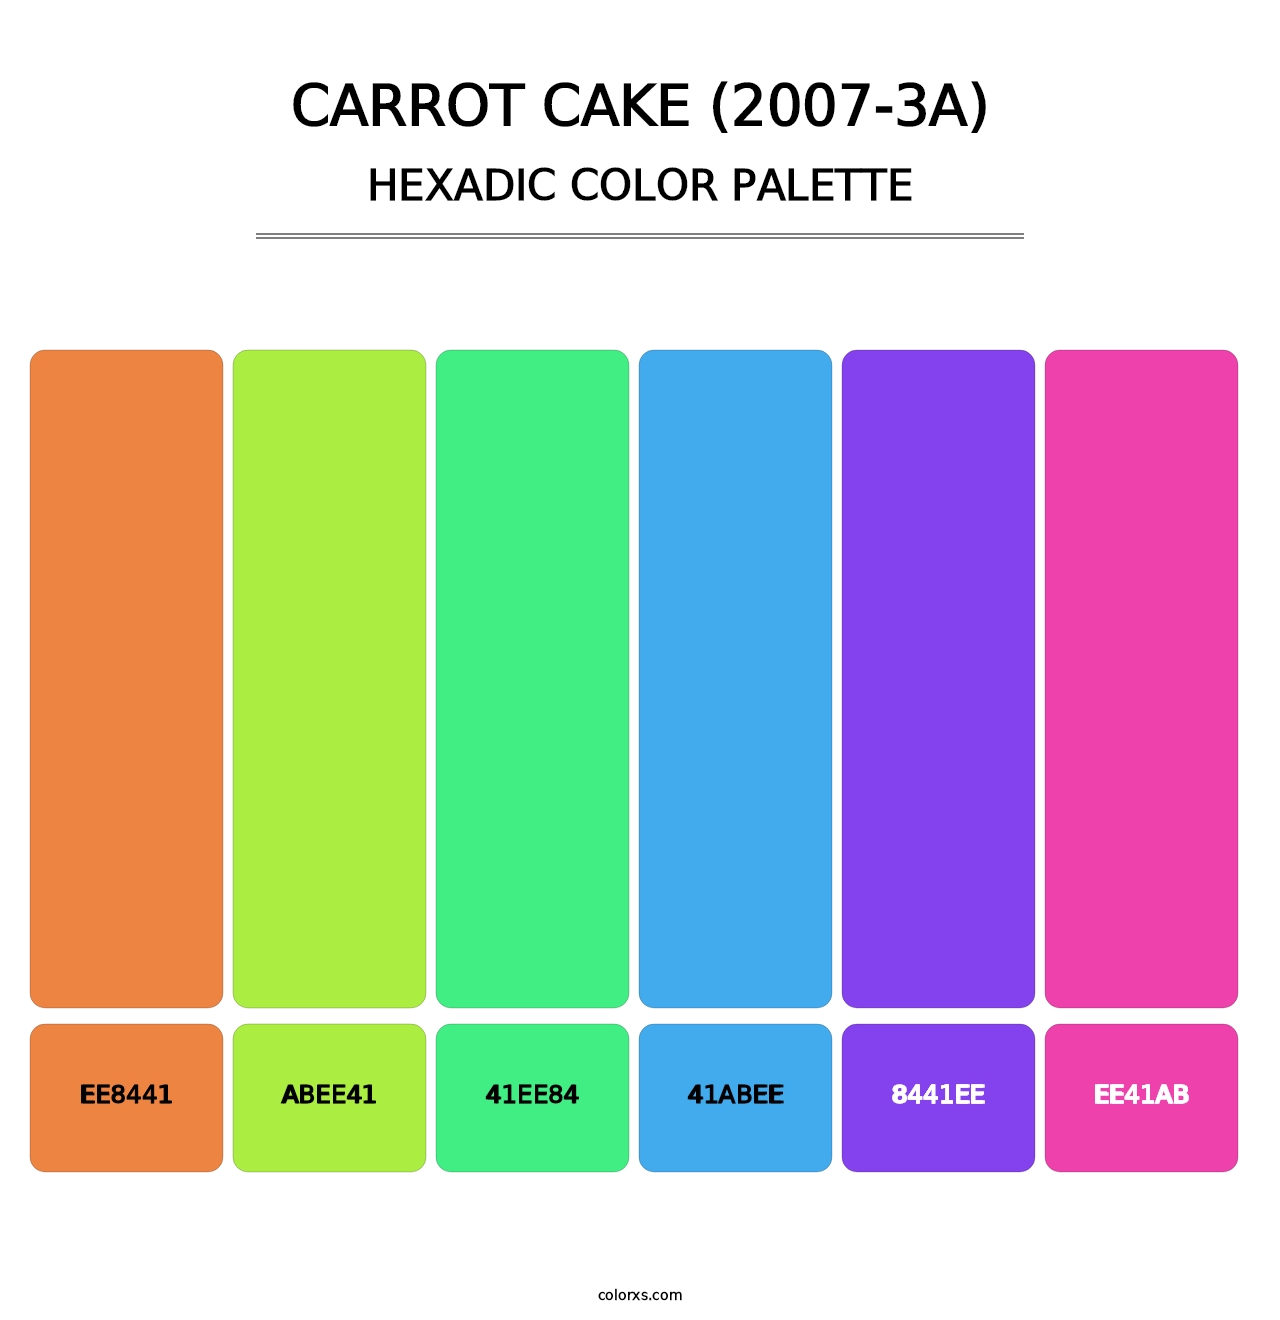 Carrot Cake (2007-3A) - Hexadic Color Palette